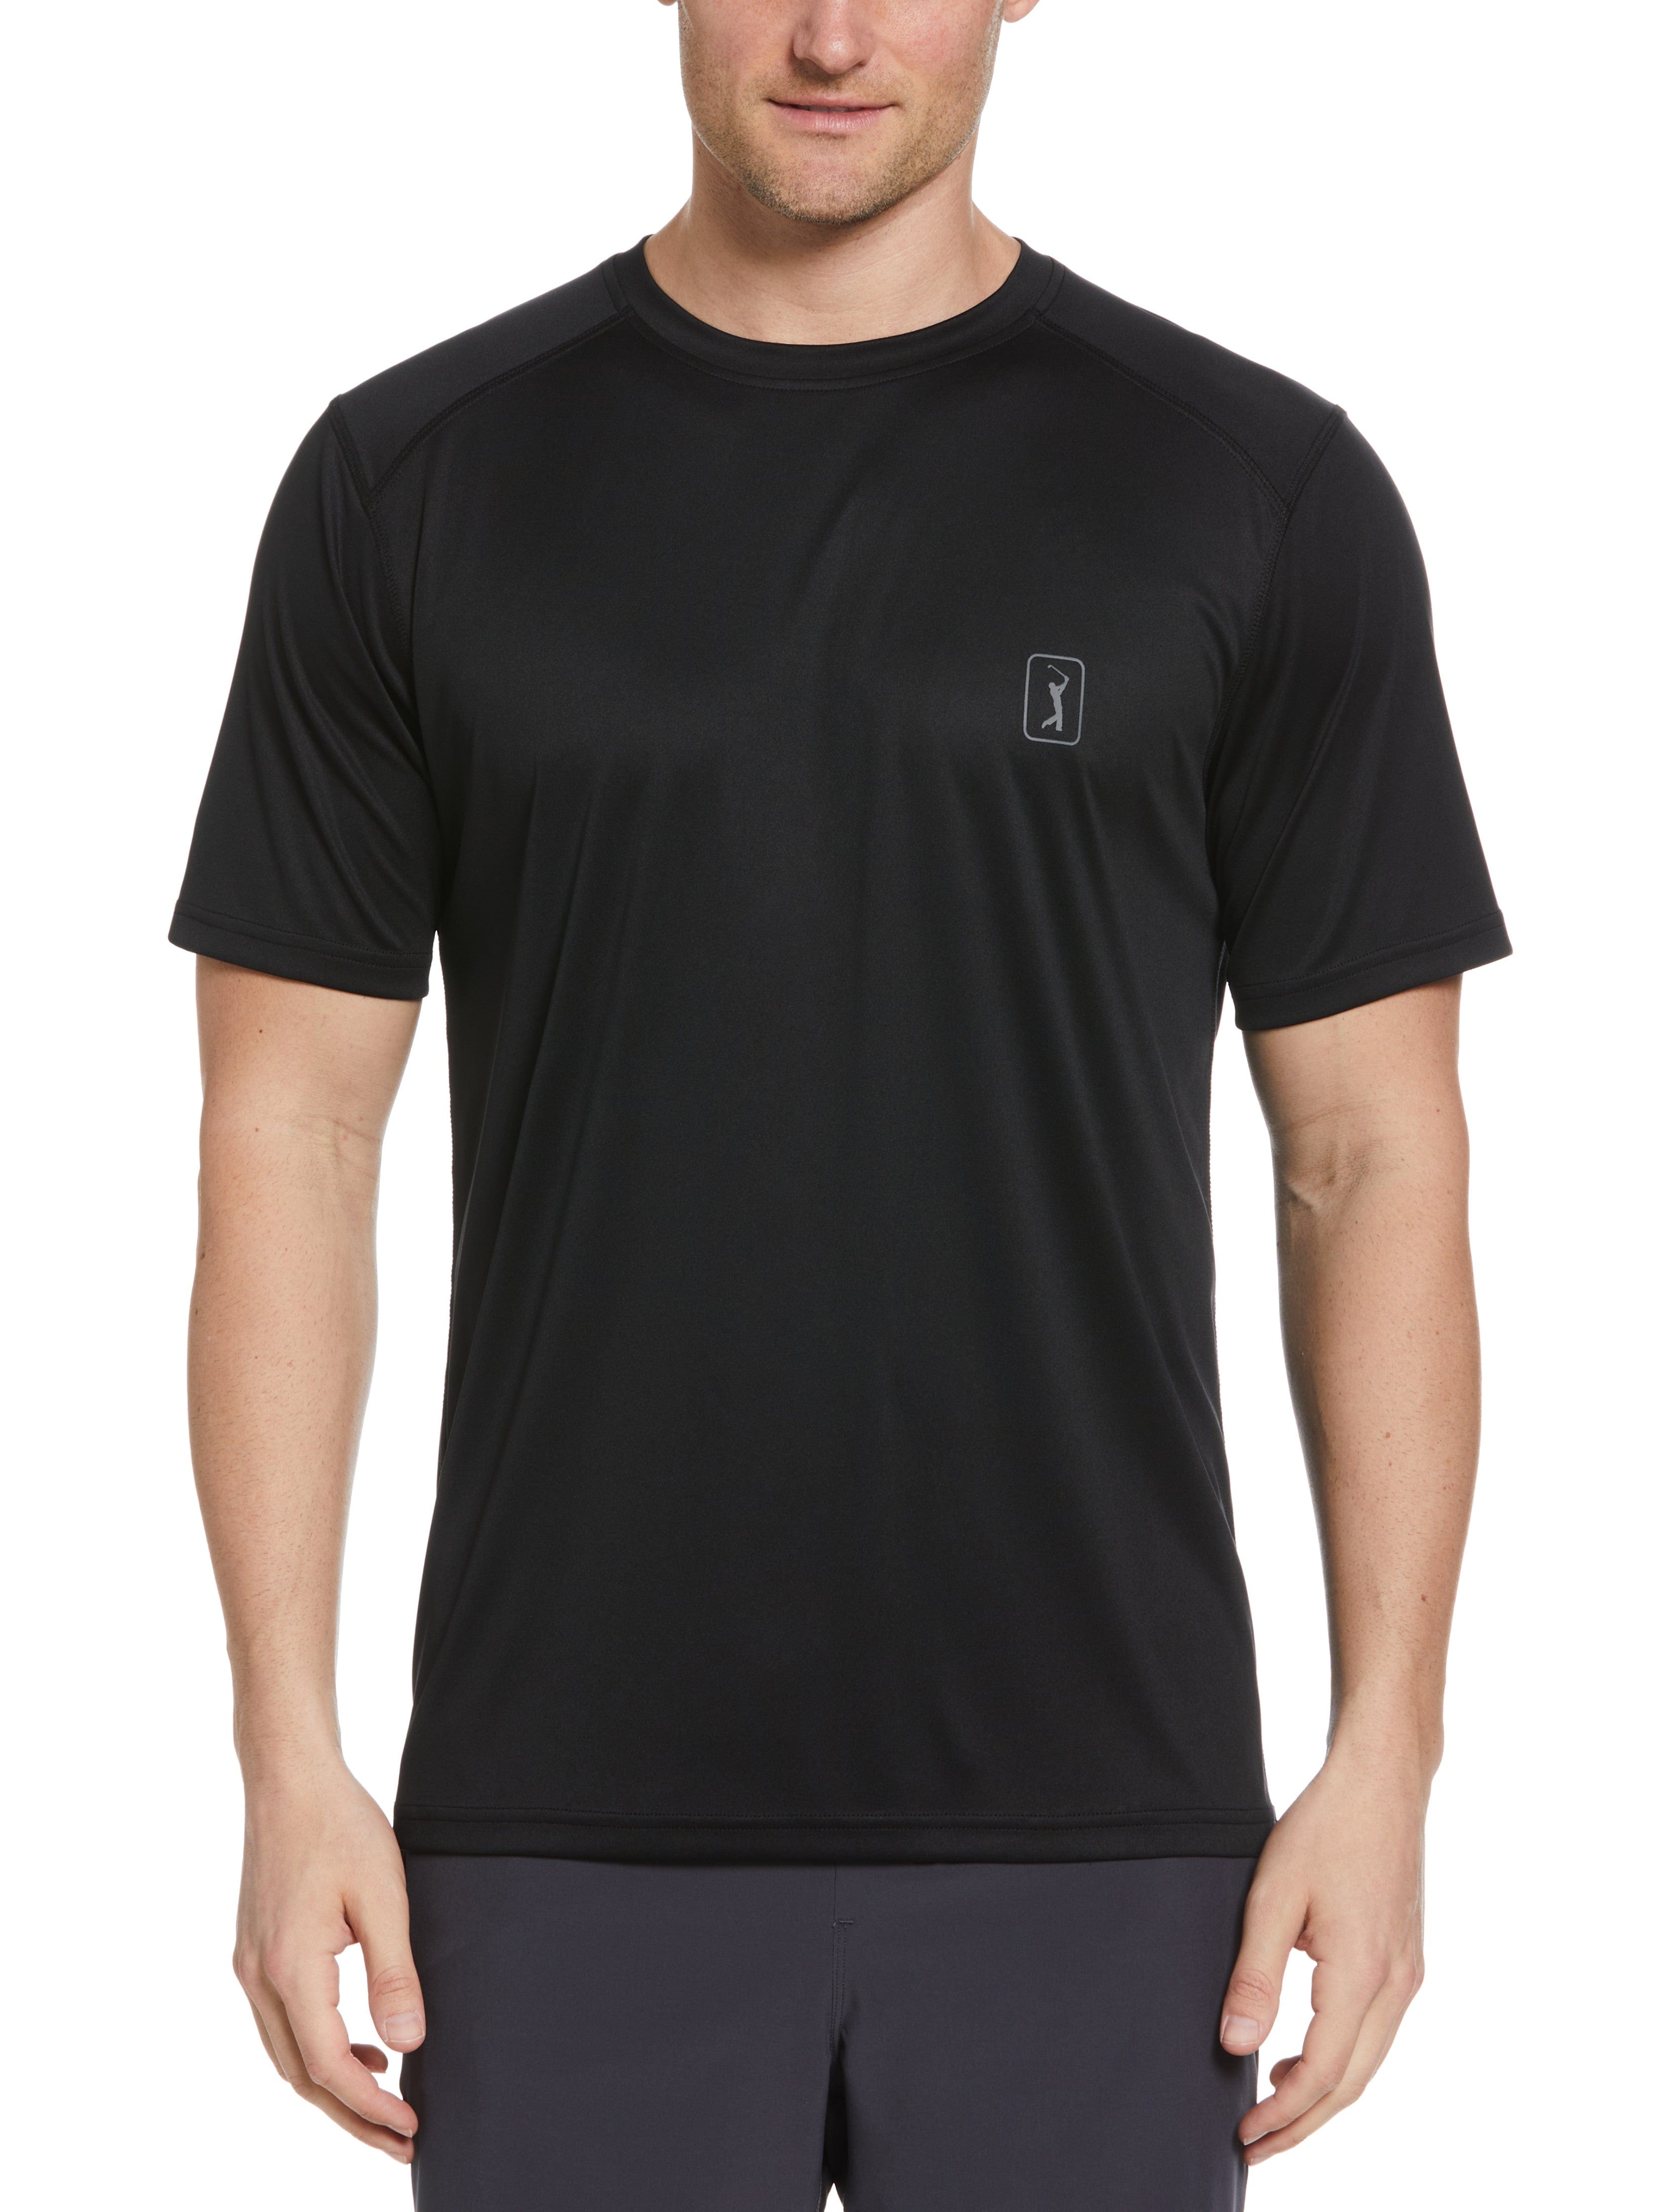 PGA TOUR Apparel Mens Performance Crew Golf T-Shirt, Size XL, Black, 100% Polyester | Golf Apparel Shop